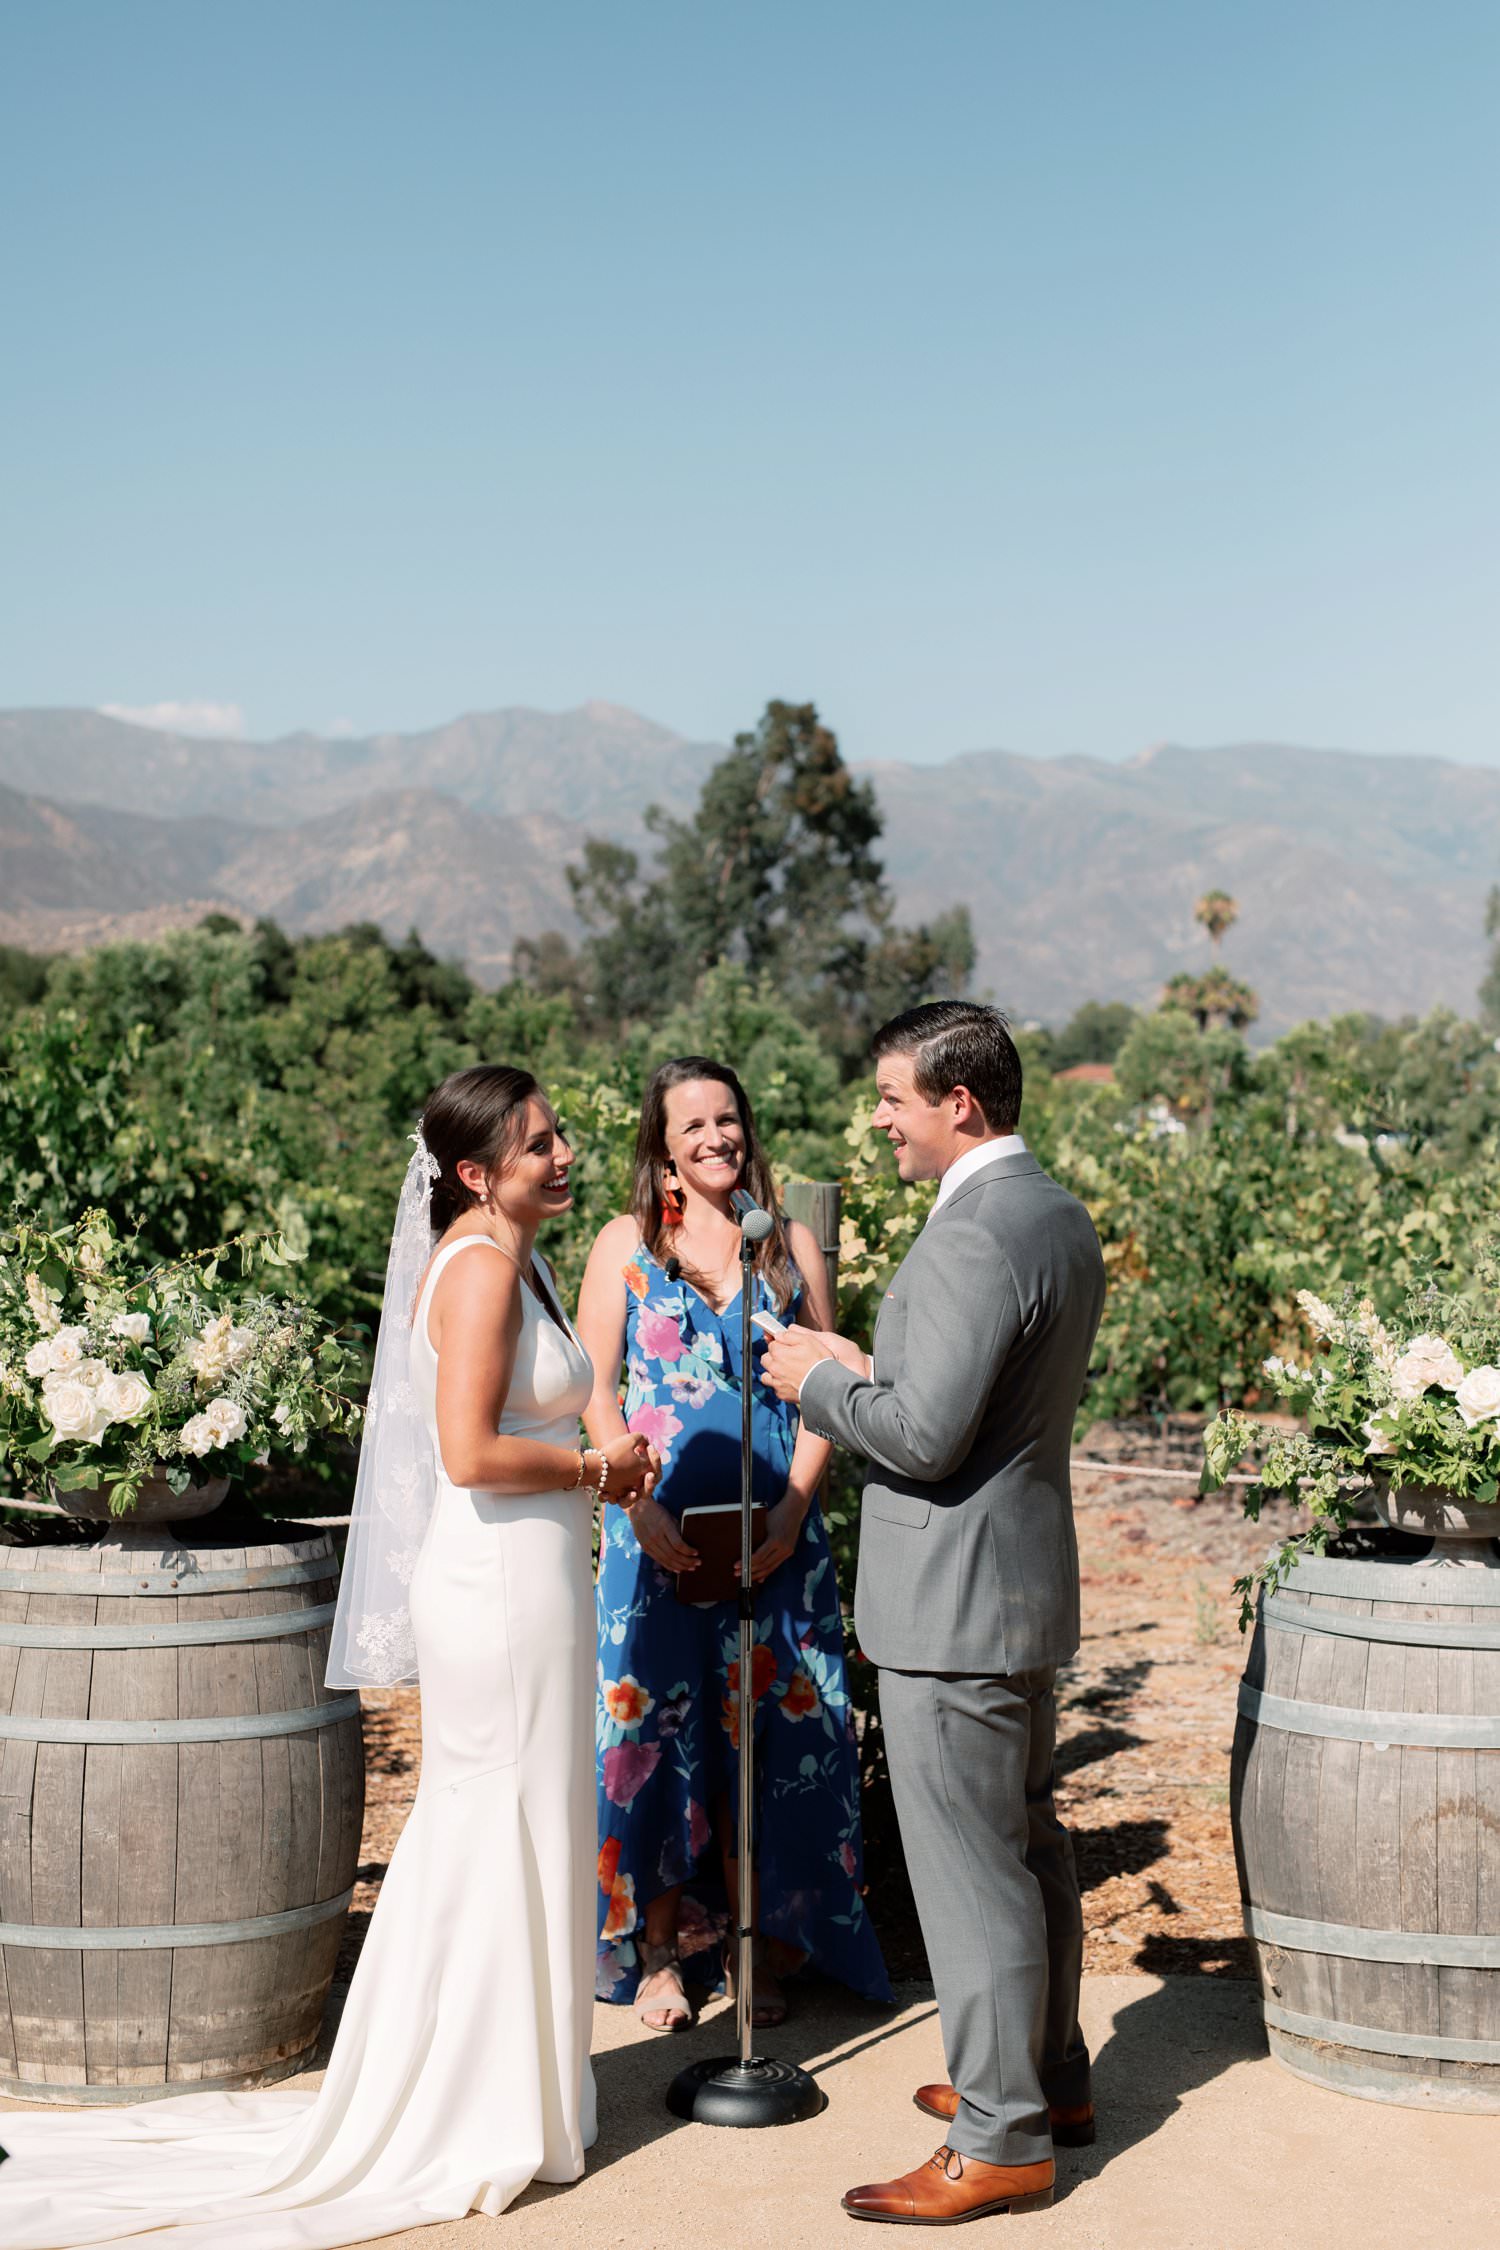 Topa Mountain Winery wedding ceremony